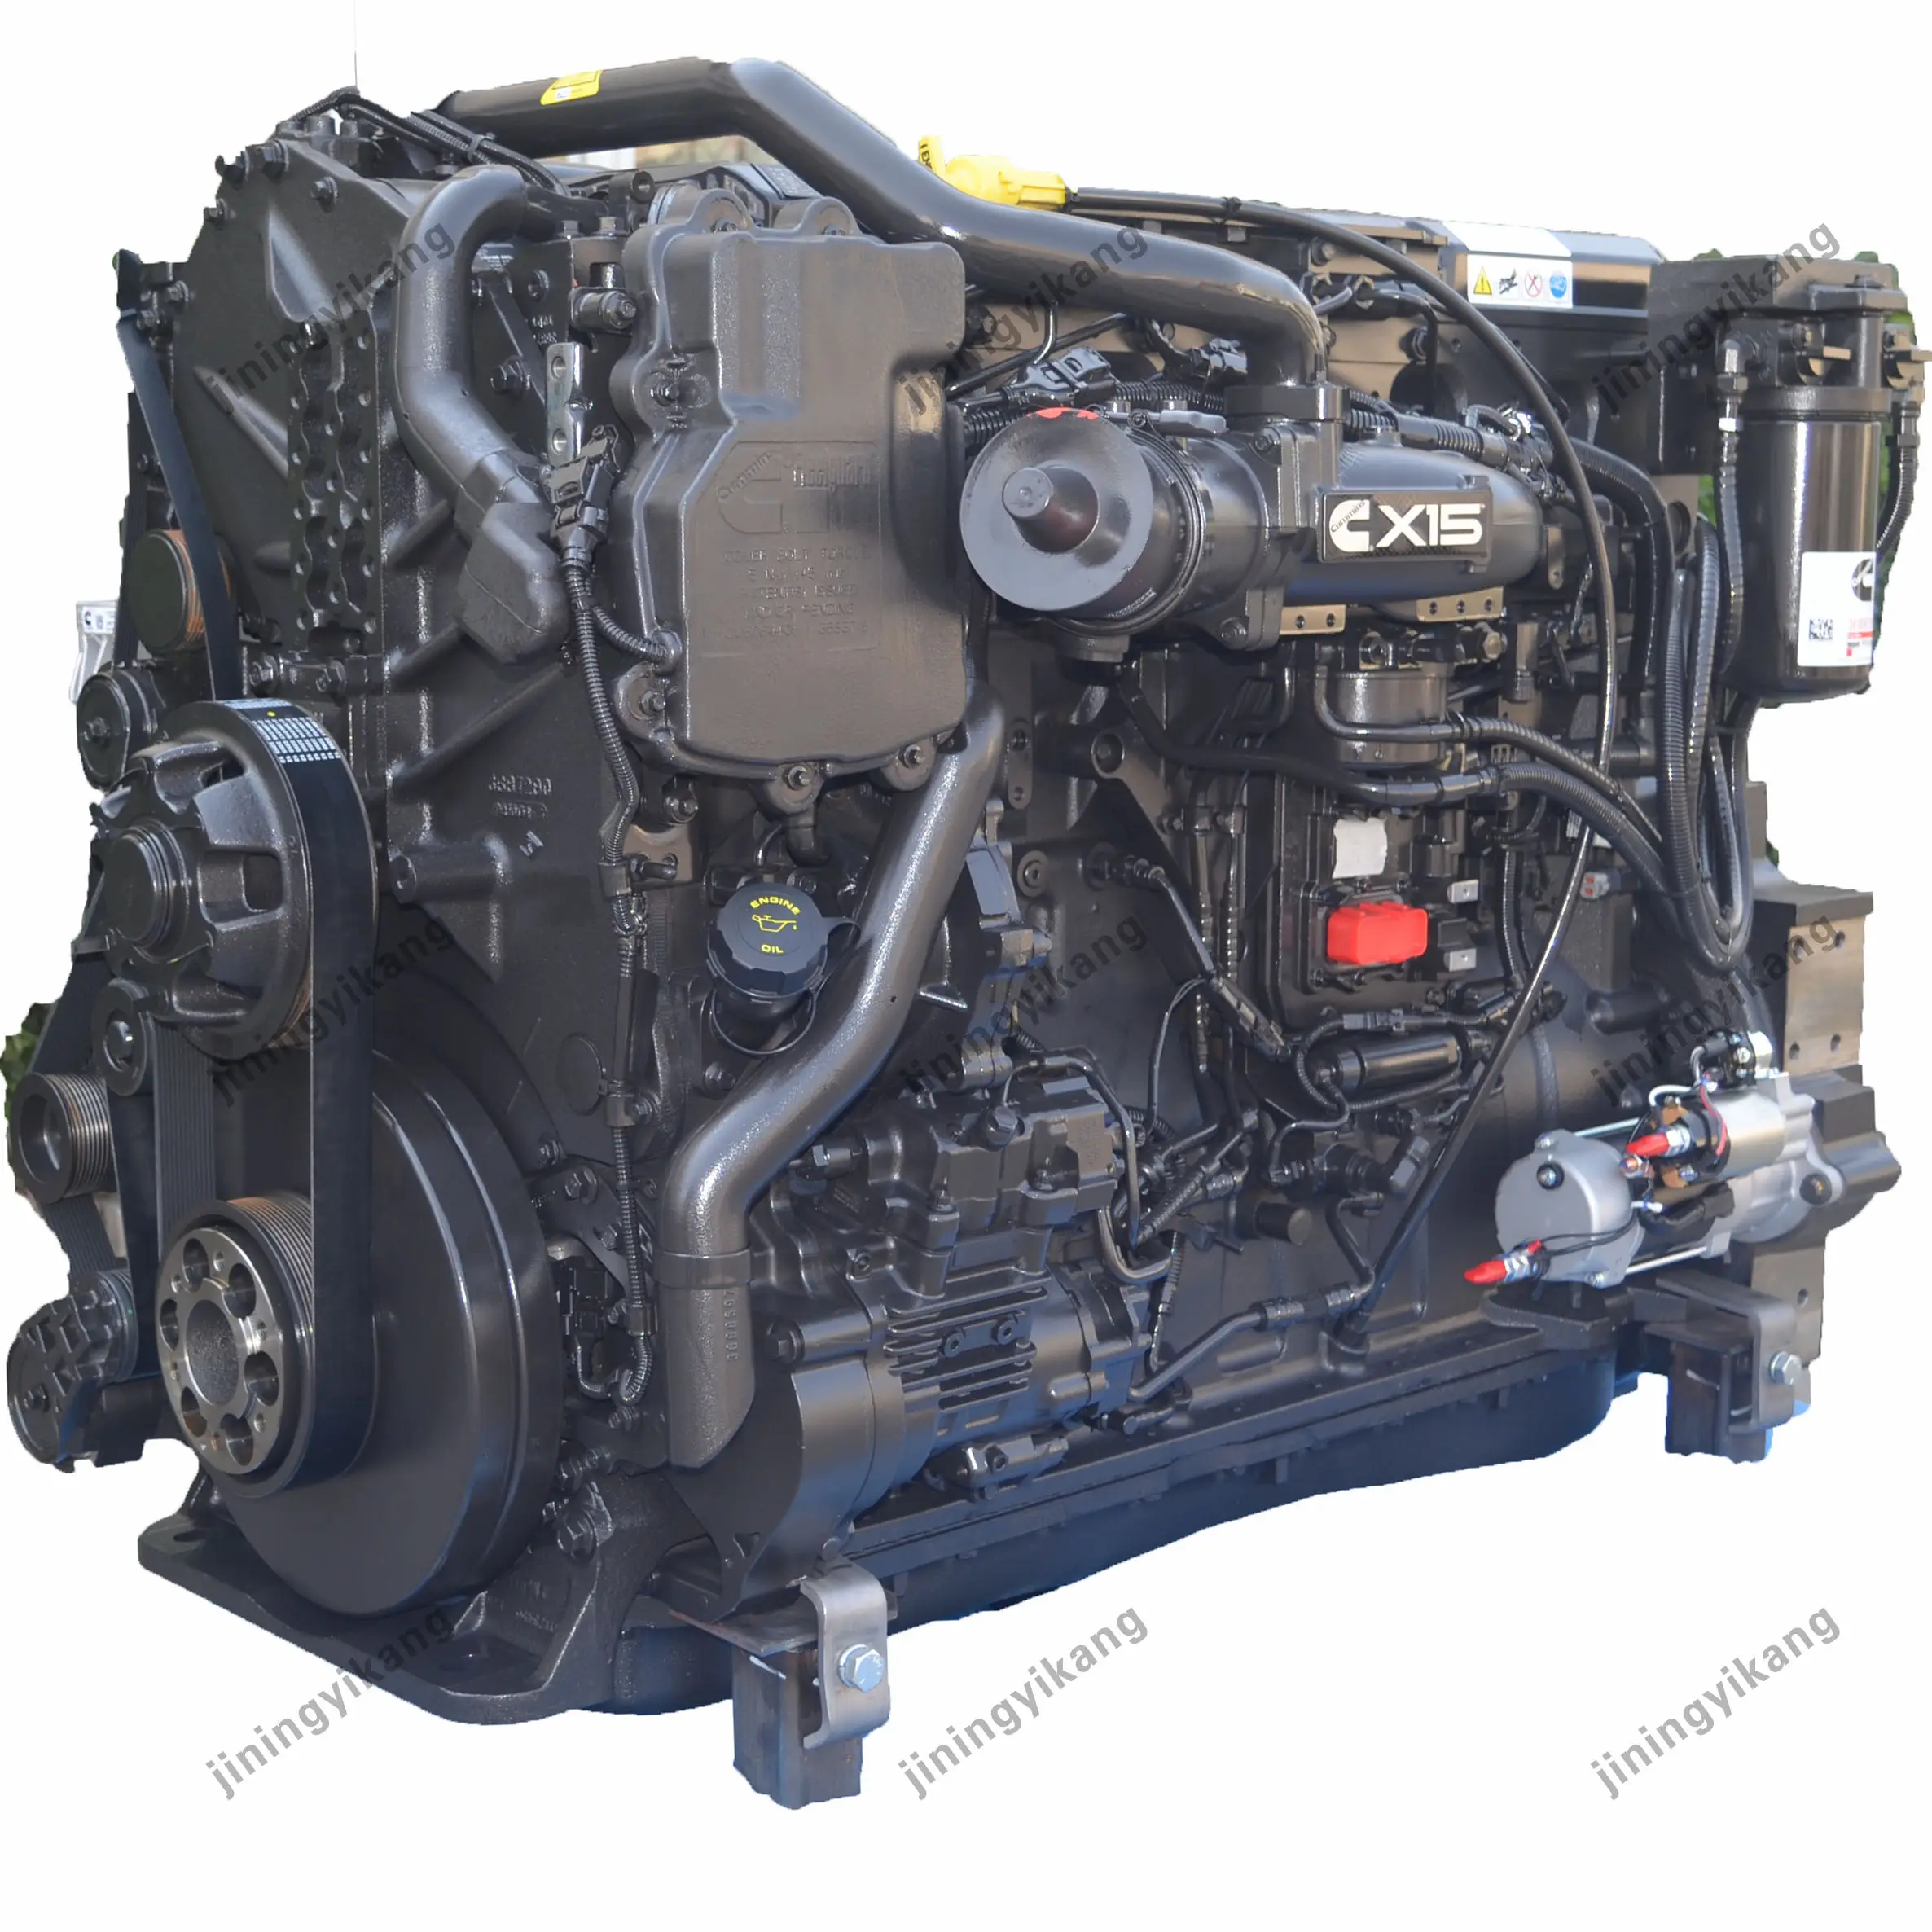 Brandneue Isx15 Qsx15 X15 15l PS Motor Dieselmotor Baugruppe